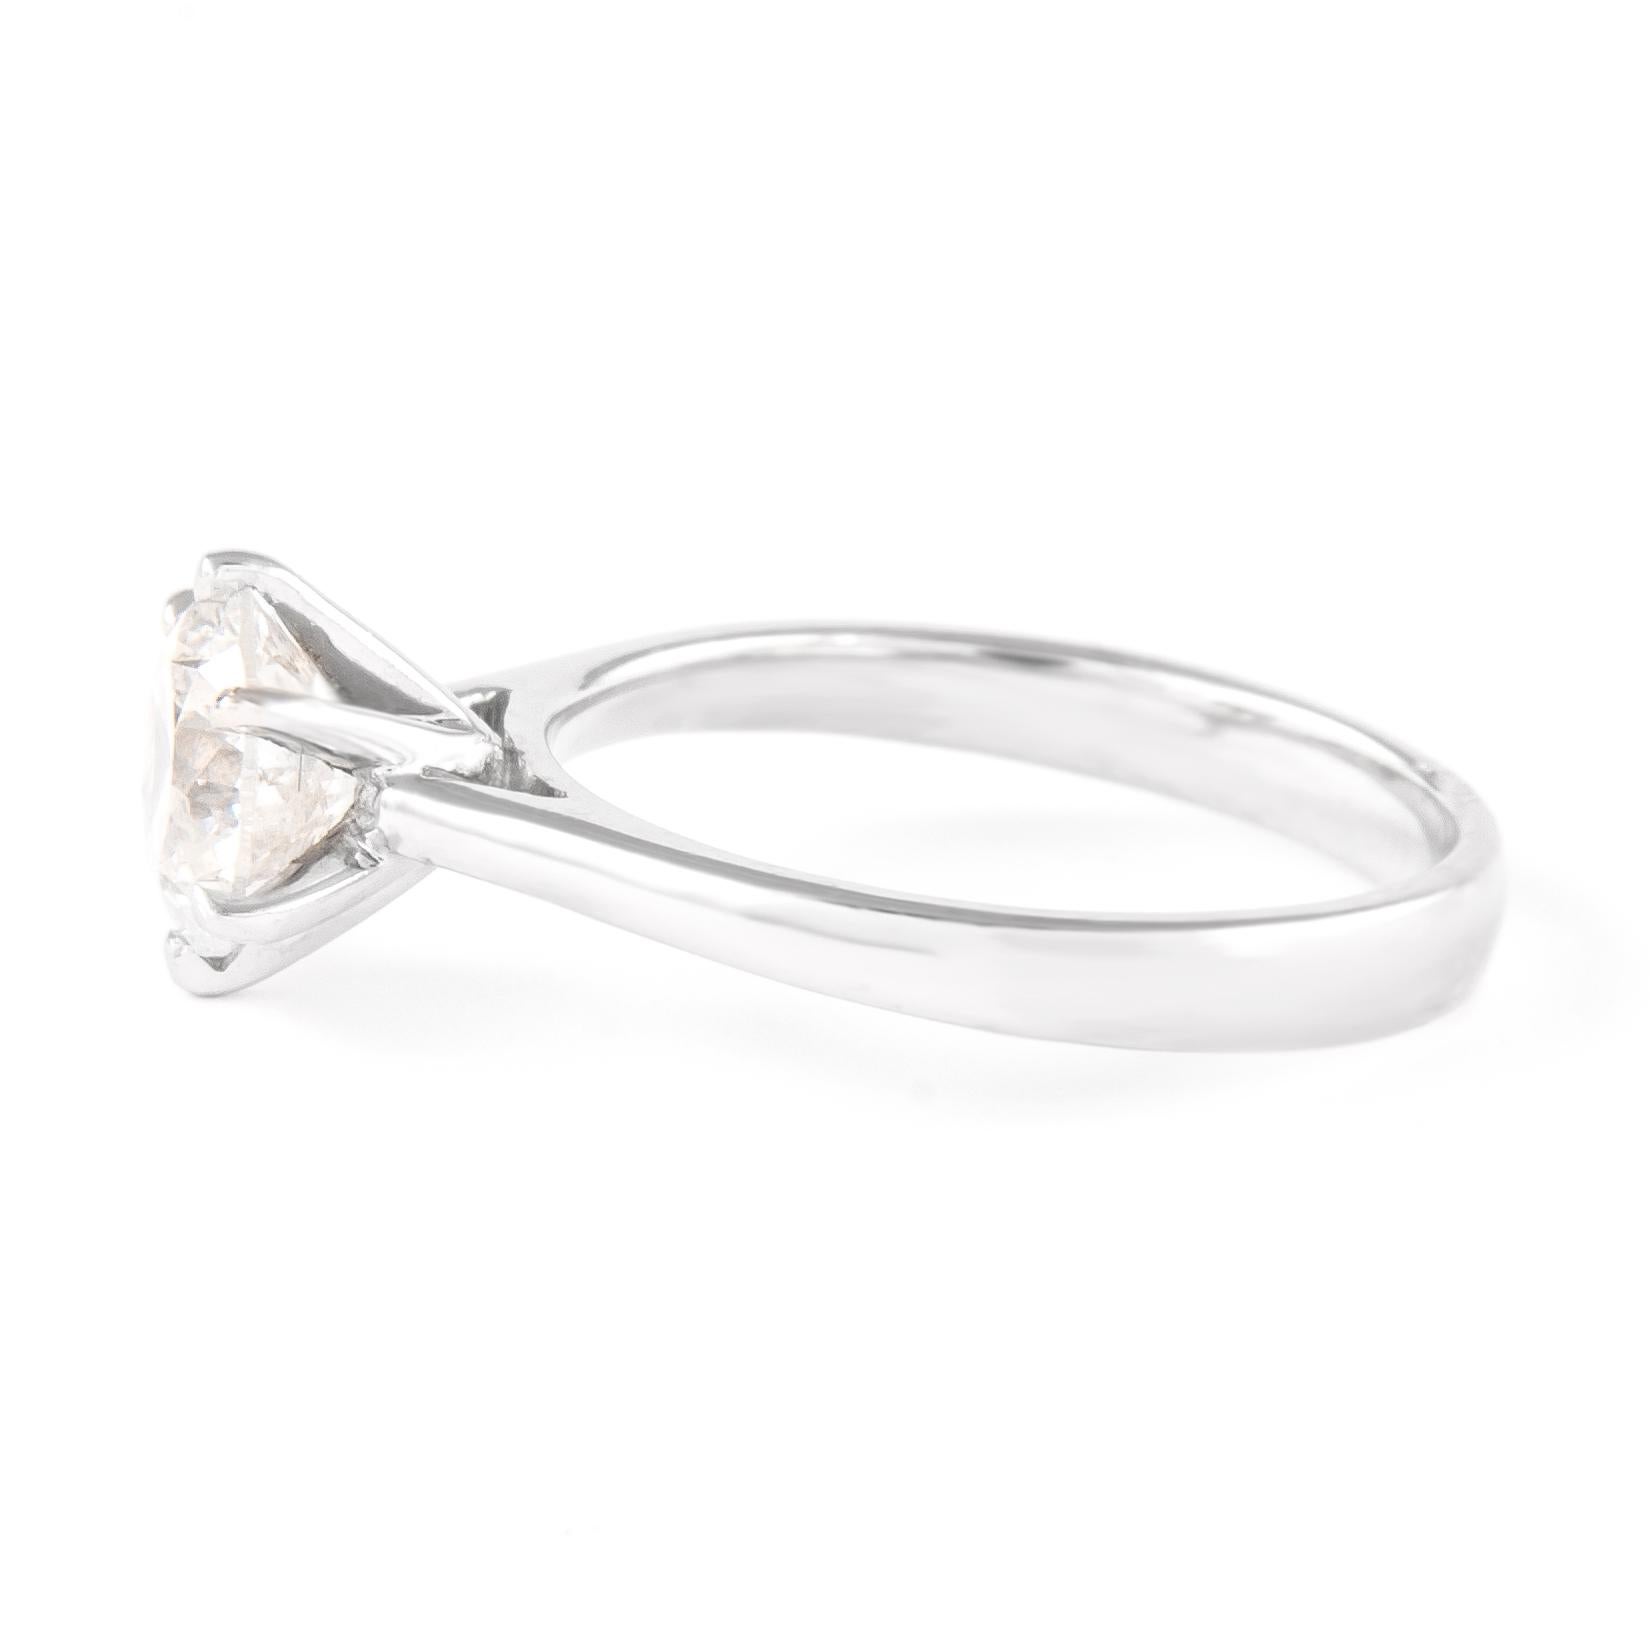 Round Cut 1.55 Carat Round Brilliant Diamond Engagement Ring 18 Karat White Gold For Sale